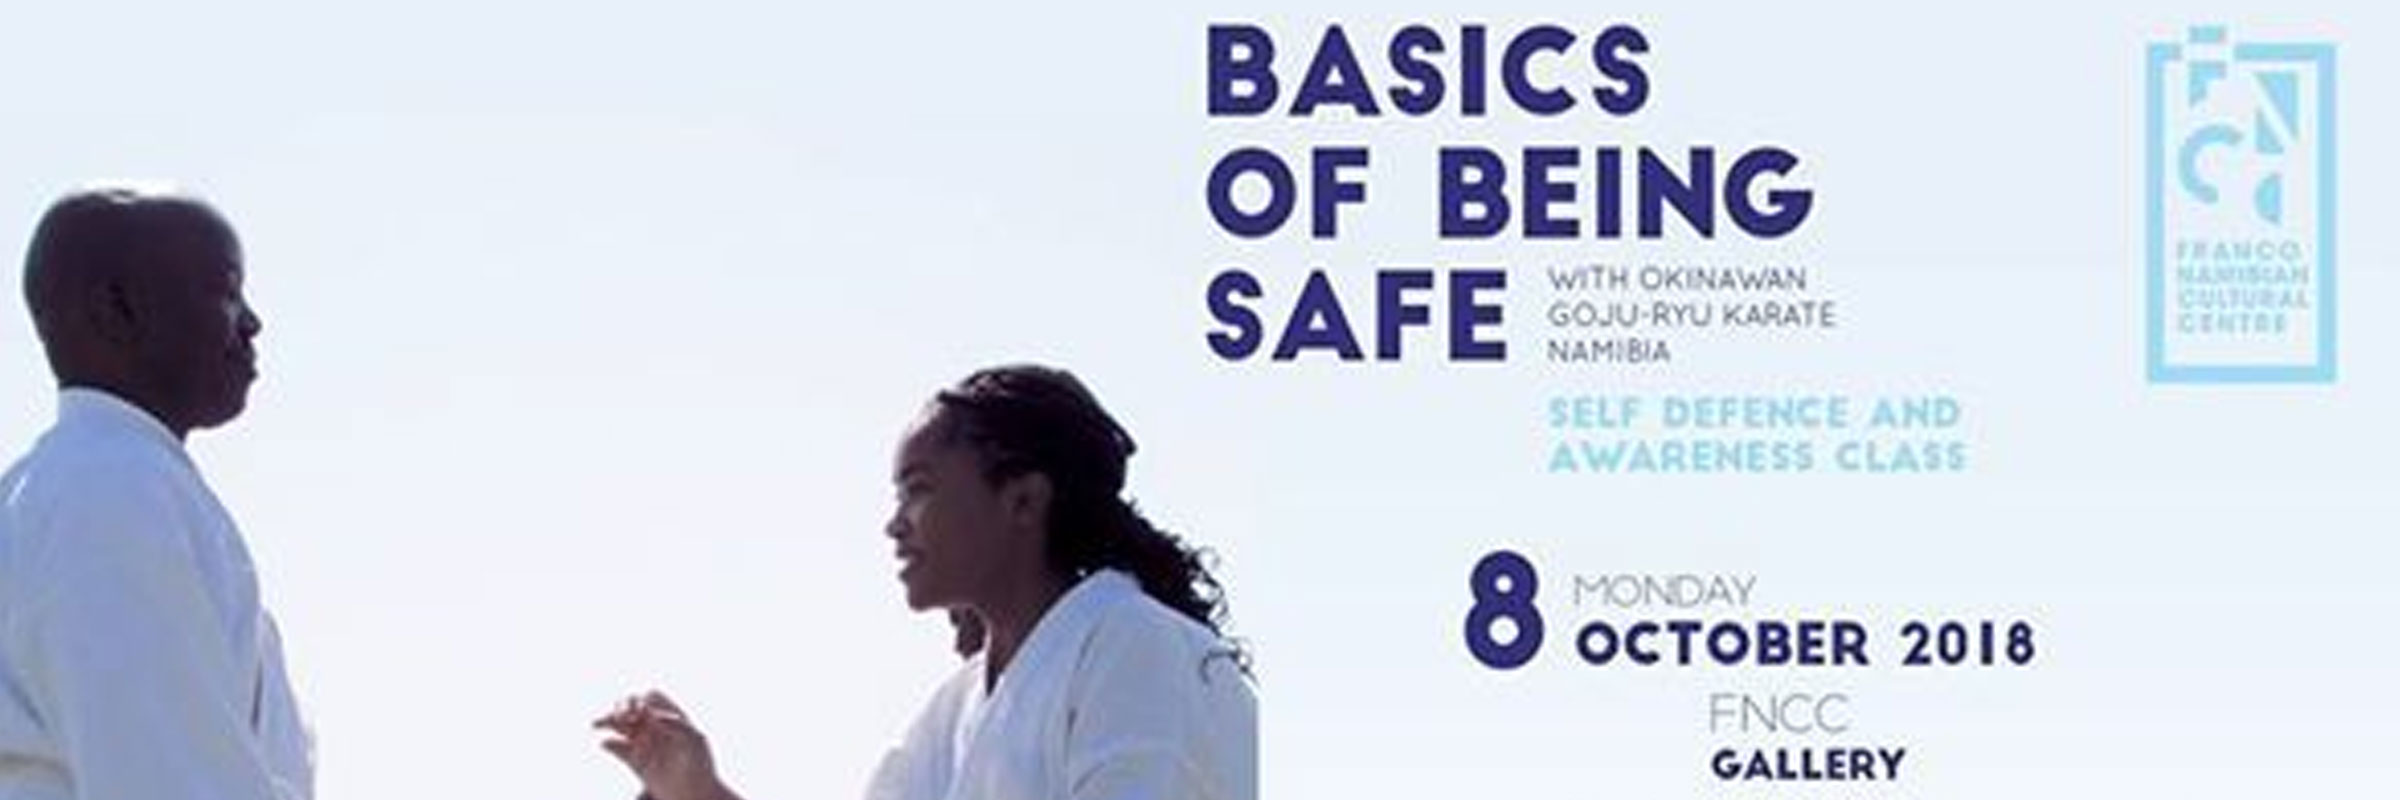 Basics of Being Safe